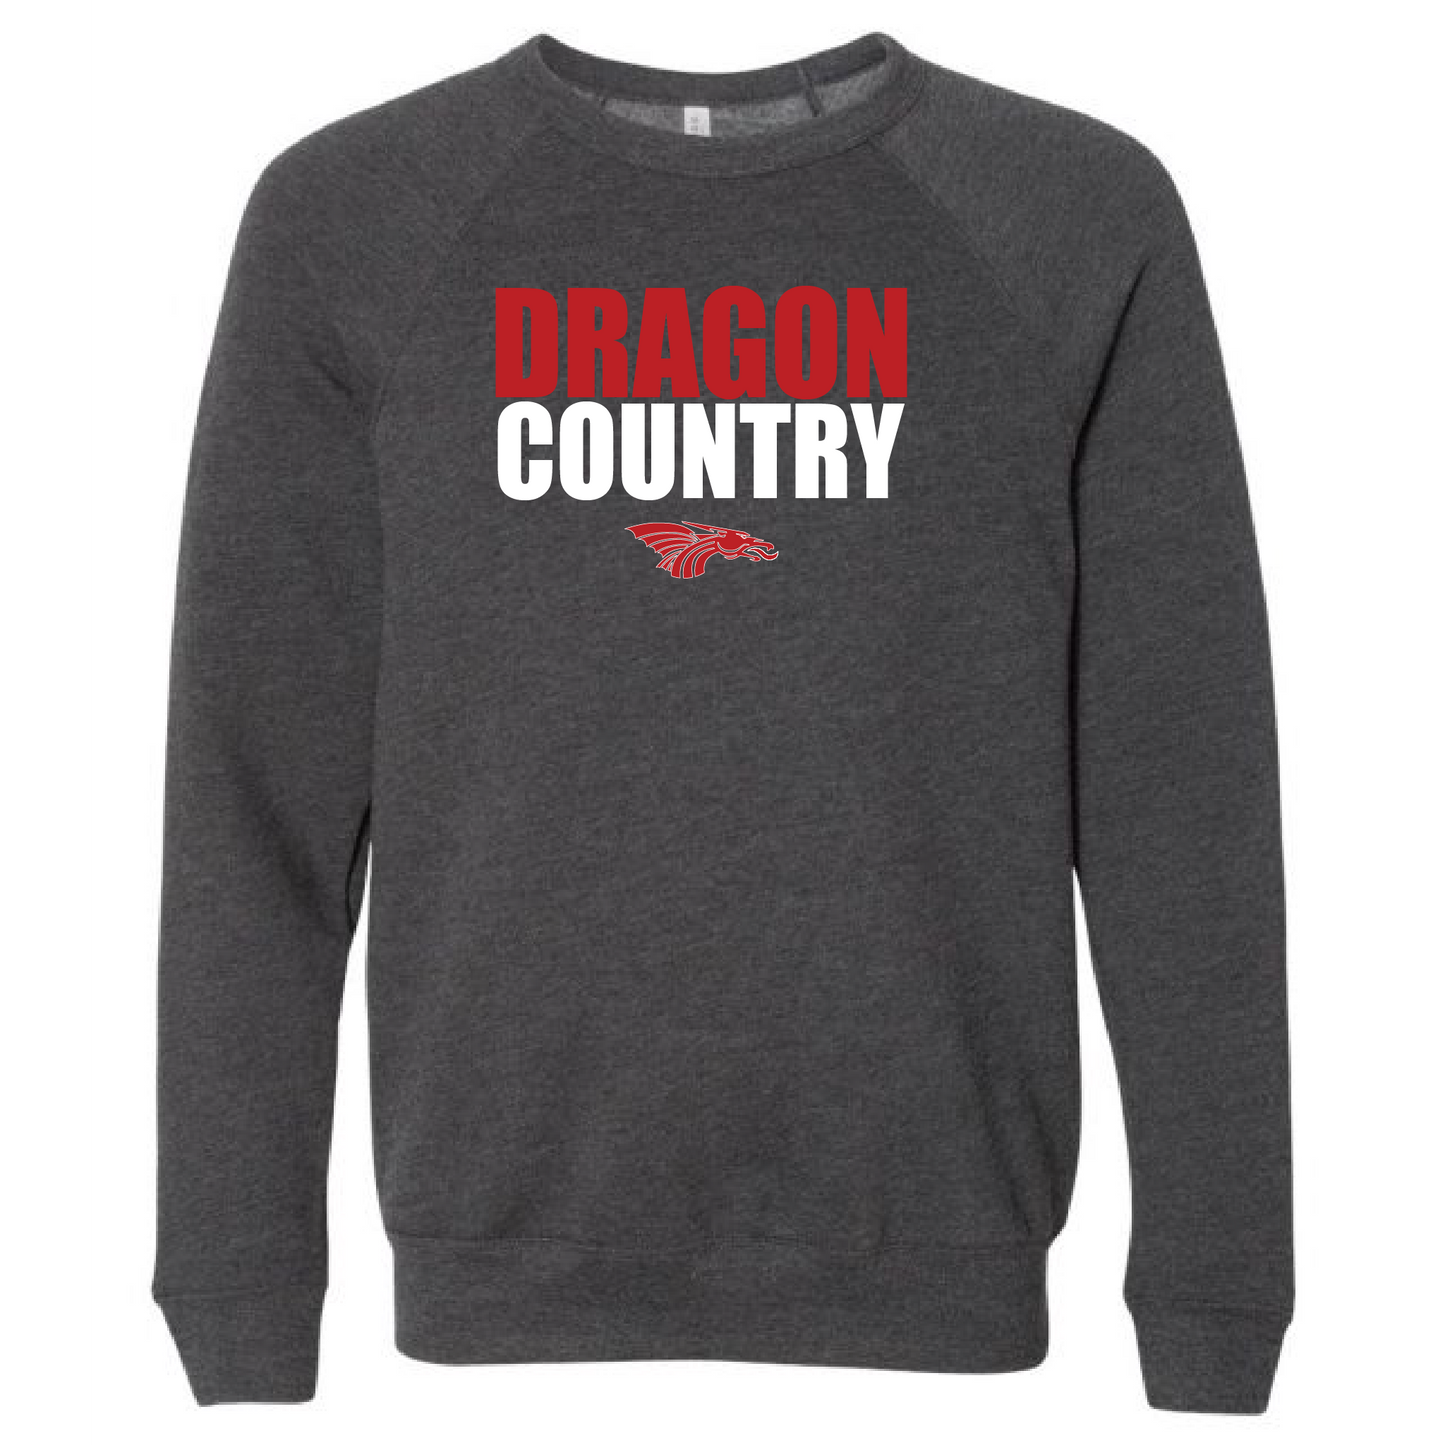 Unisex Sweatshirt - Dragon Country